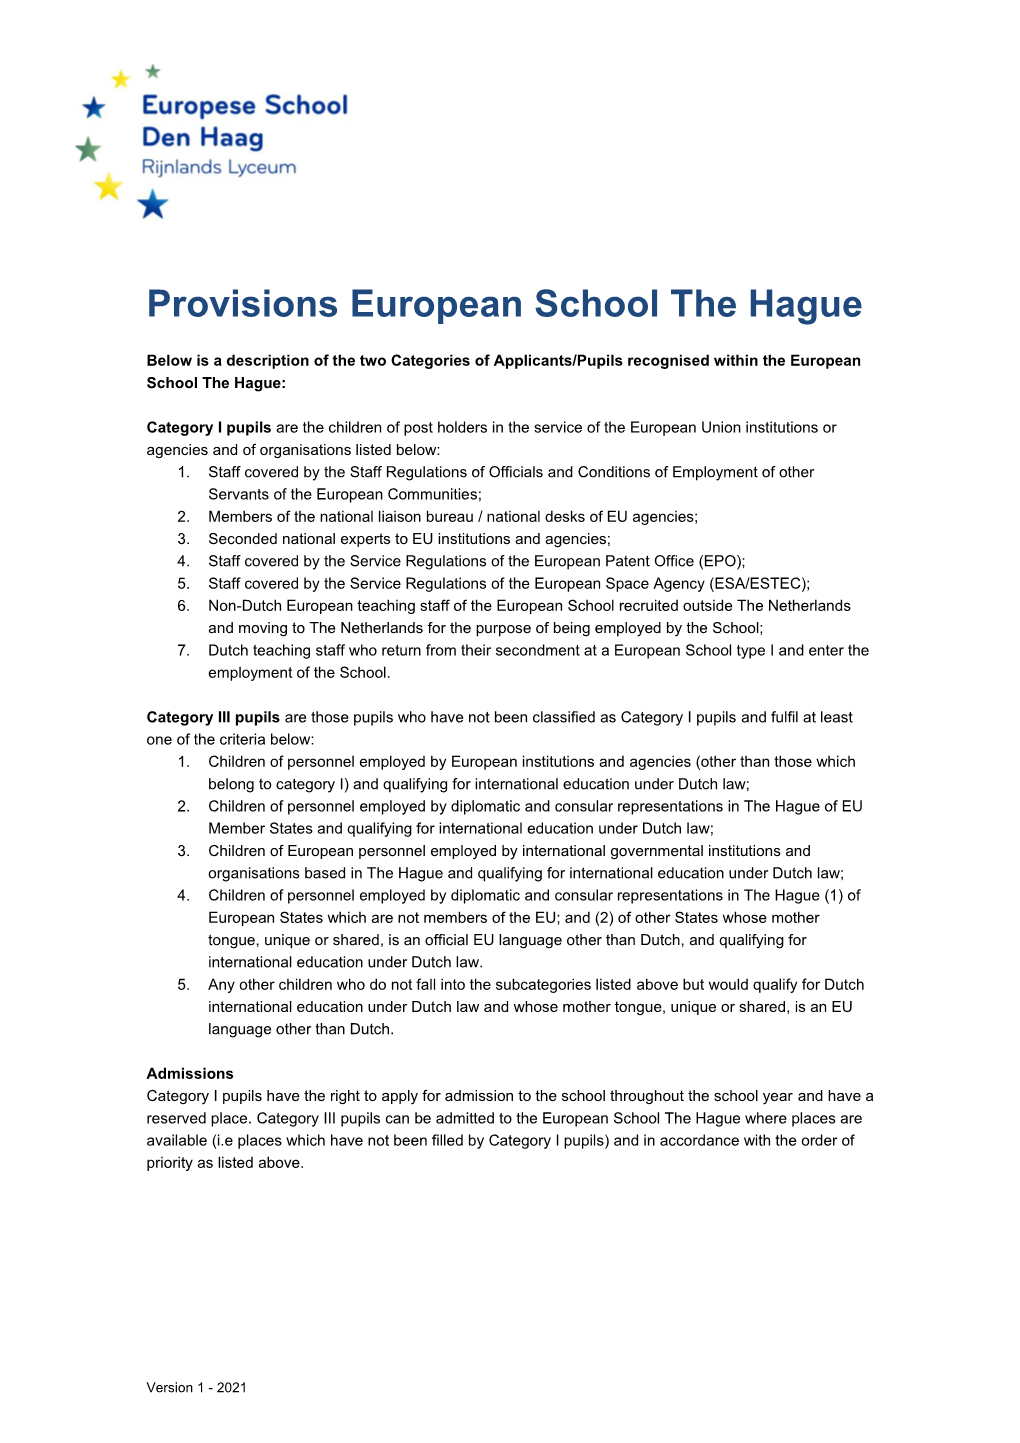 Provisions European School the Hague